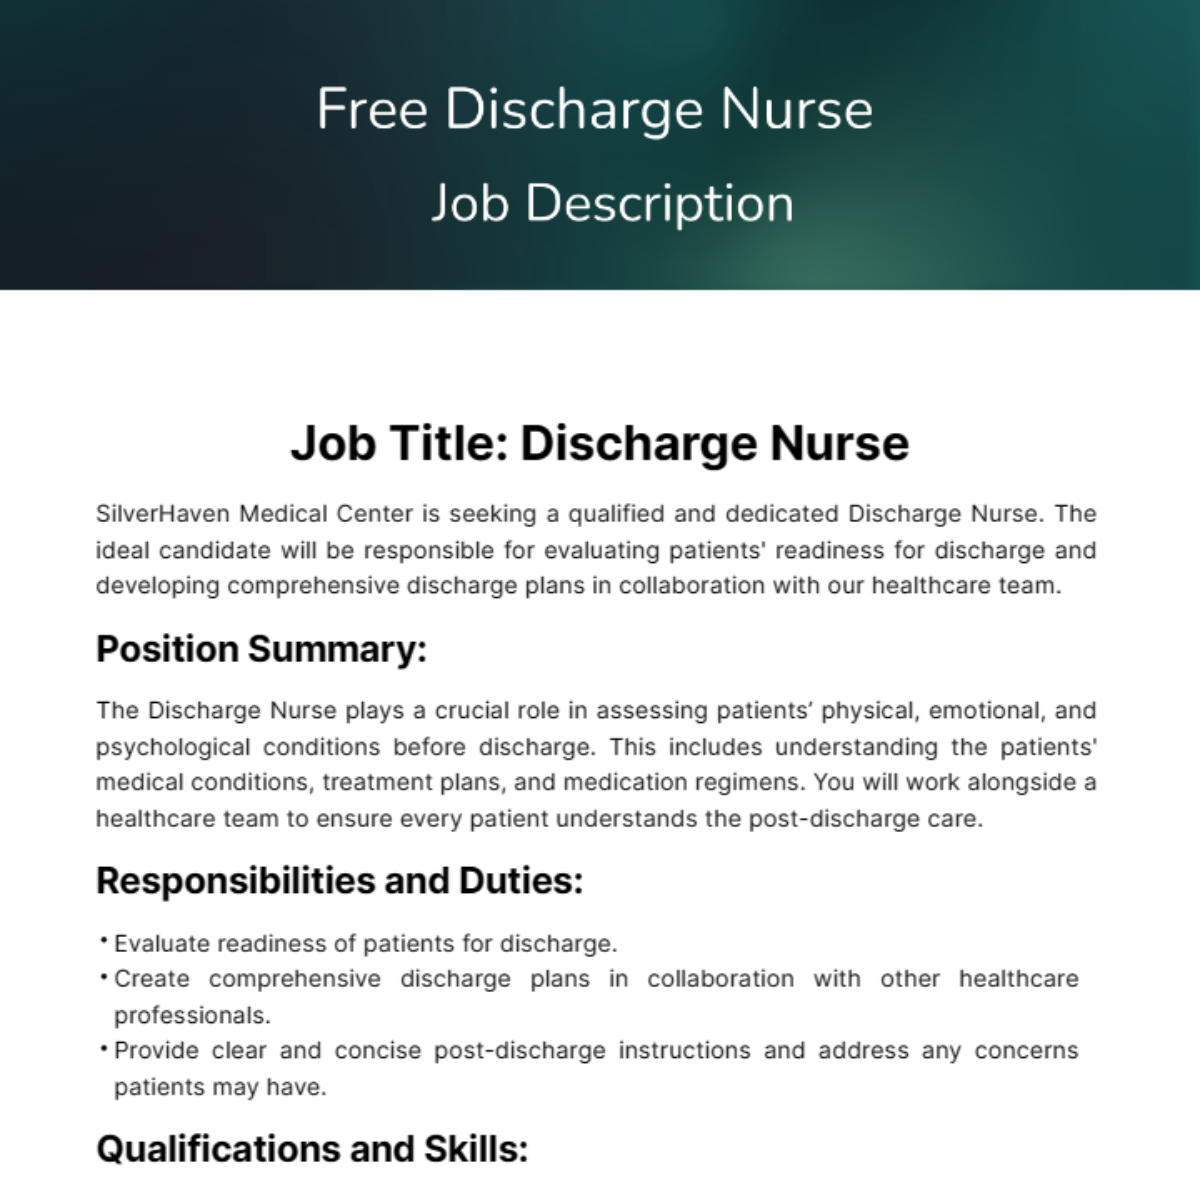 Free Discharge Nurse Job Description Template